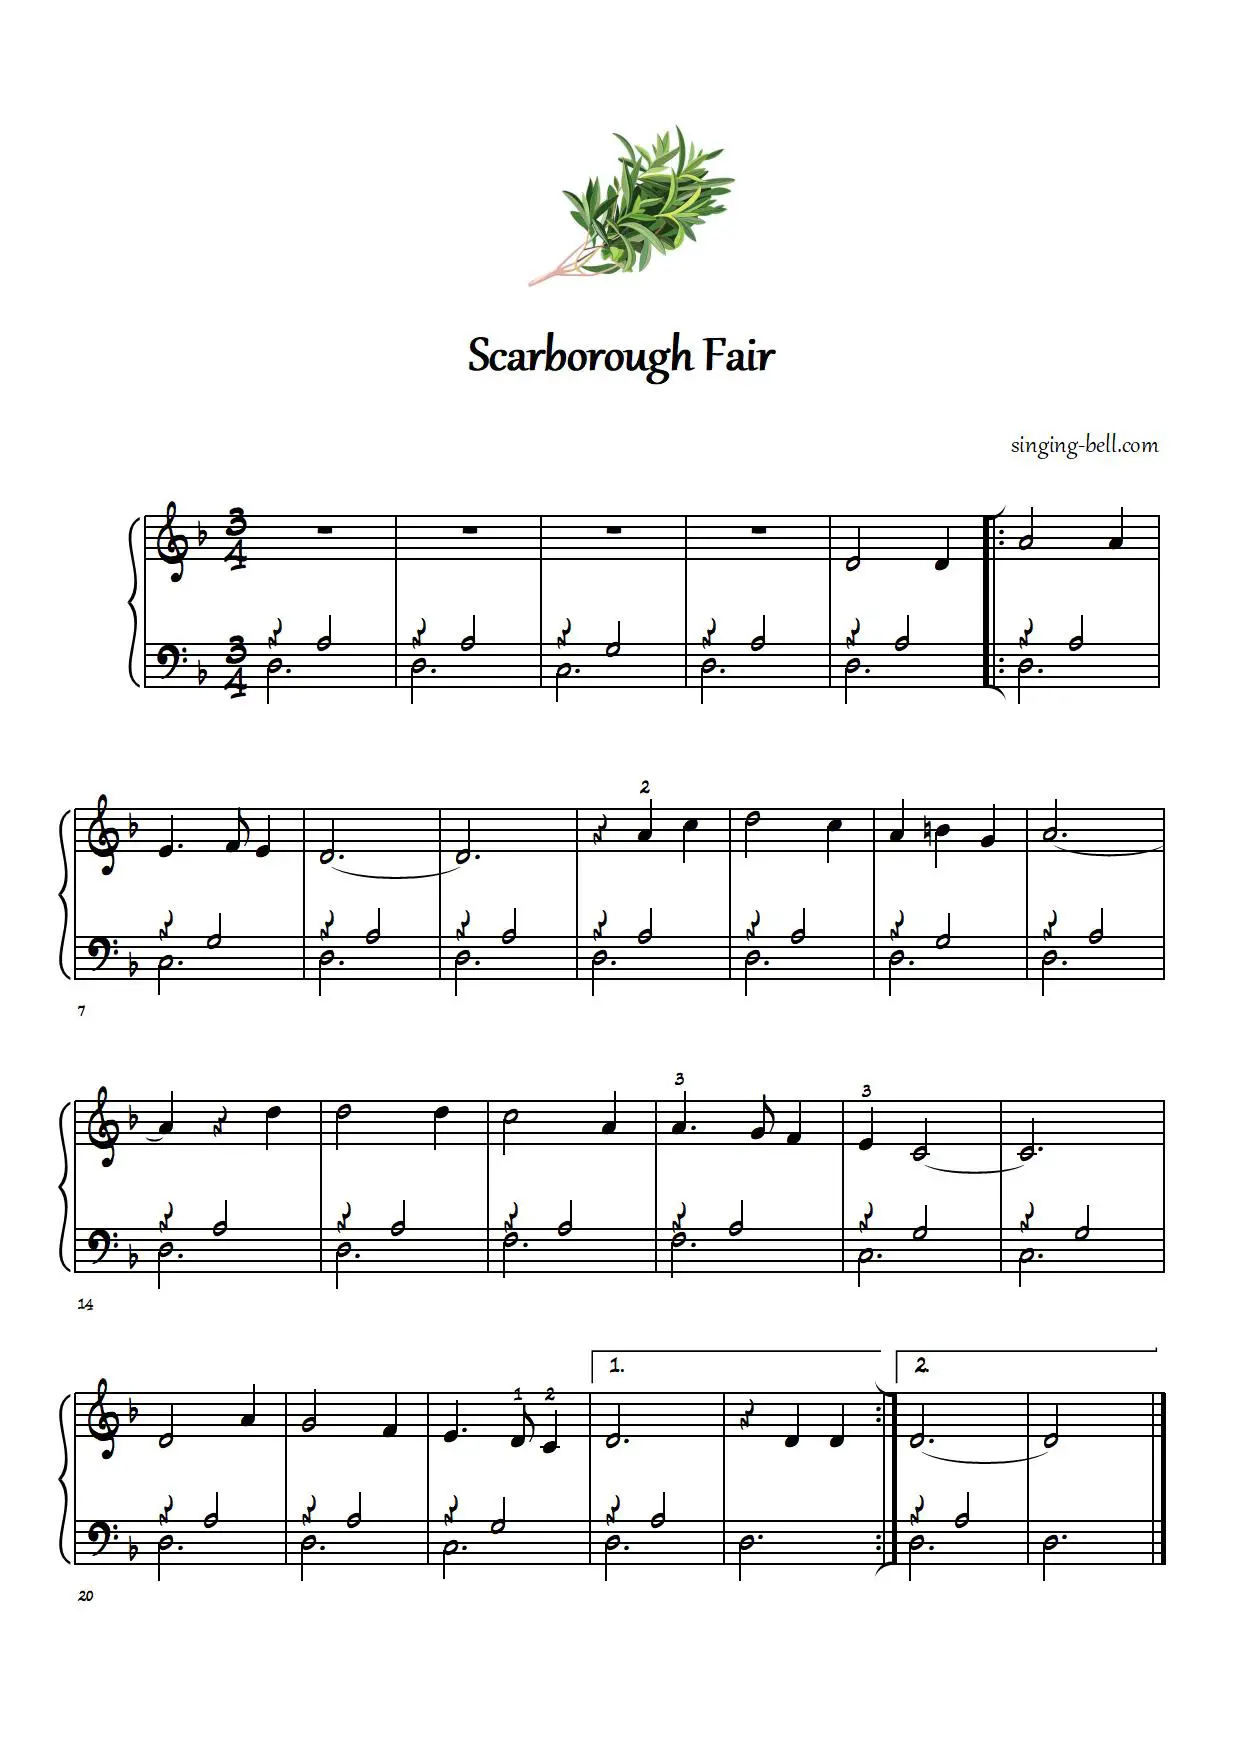 Scarborough Fair easy piano sheet music notes beginners pdf